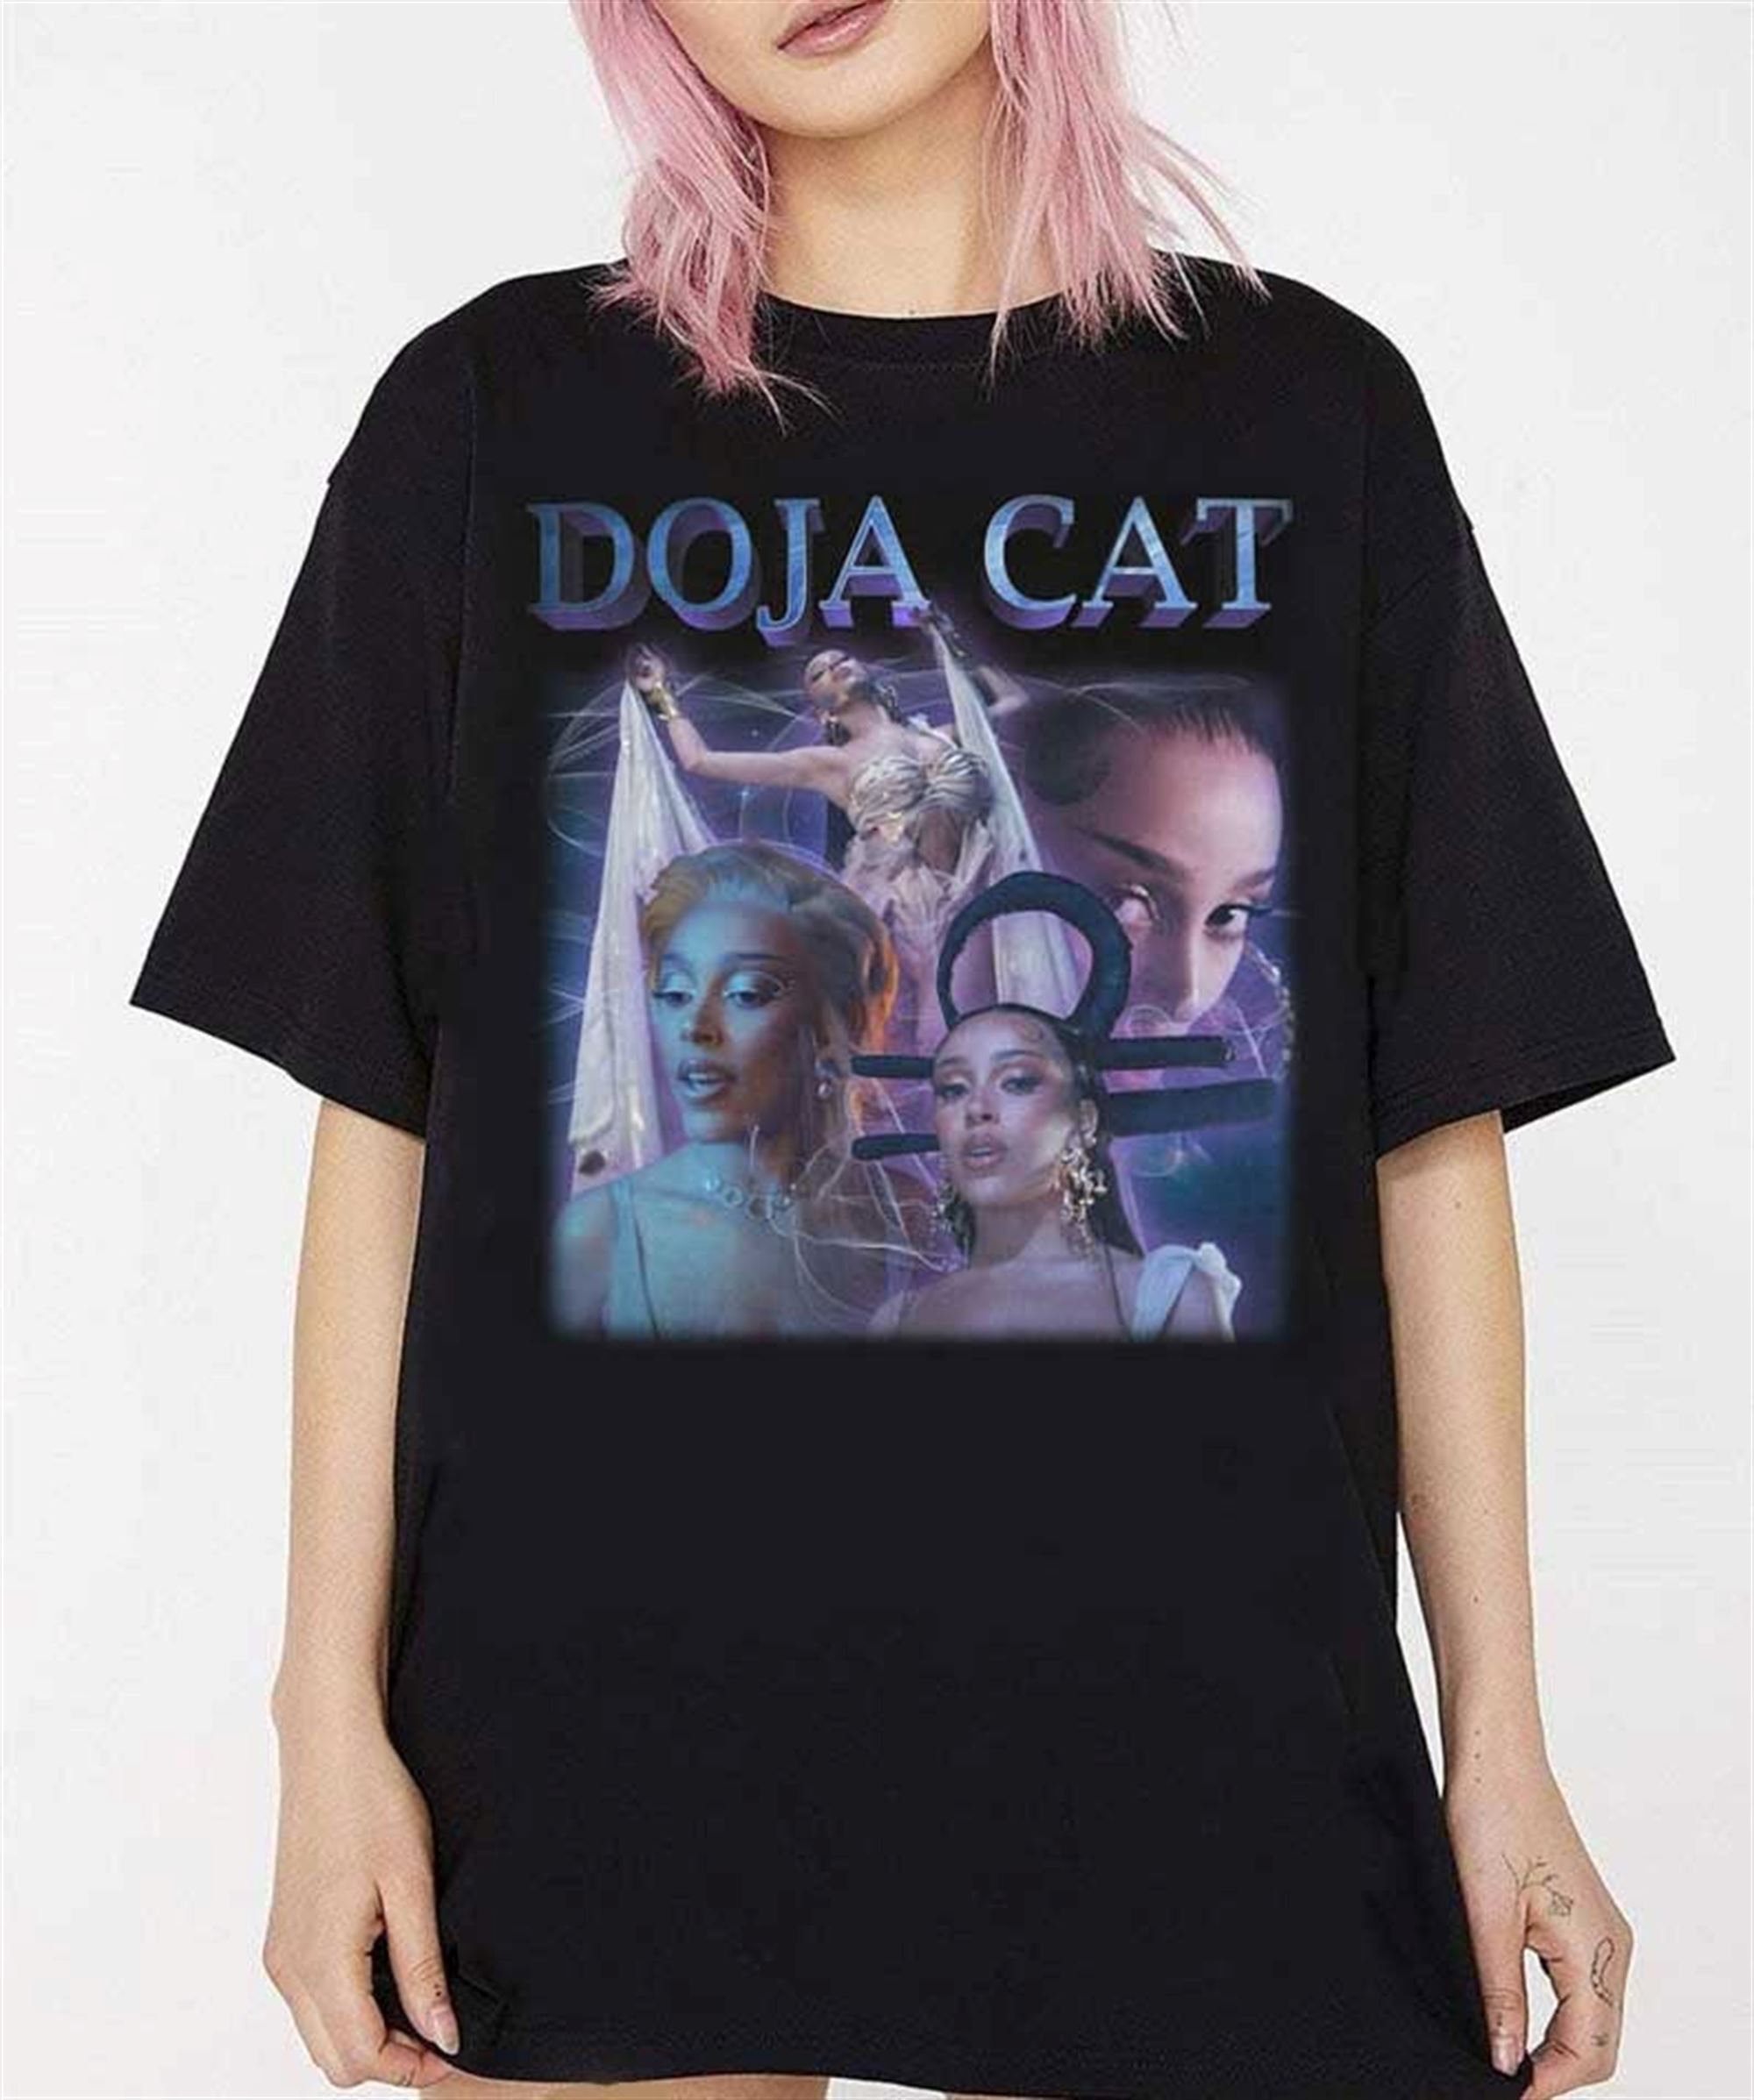 Doja Cat You Right Shirt Doja Cat Shirt Doja Cat Planet Her Album Rap Hip-hop Shirtdoja Cat Rapper Shirtdoja Cat Merch Shirt Ha-c22-7-7